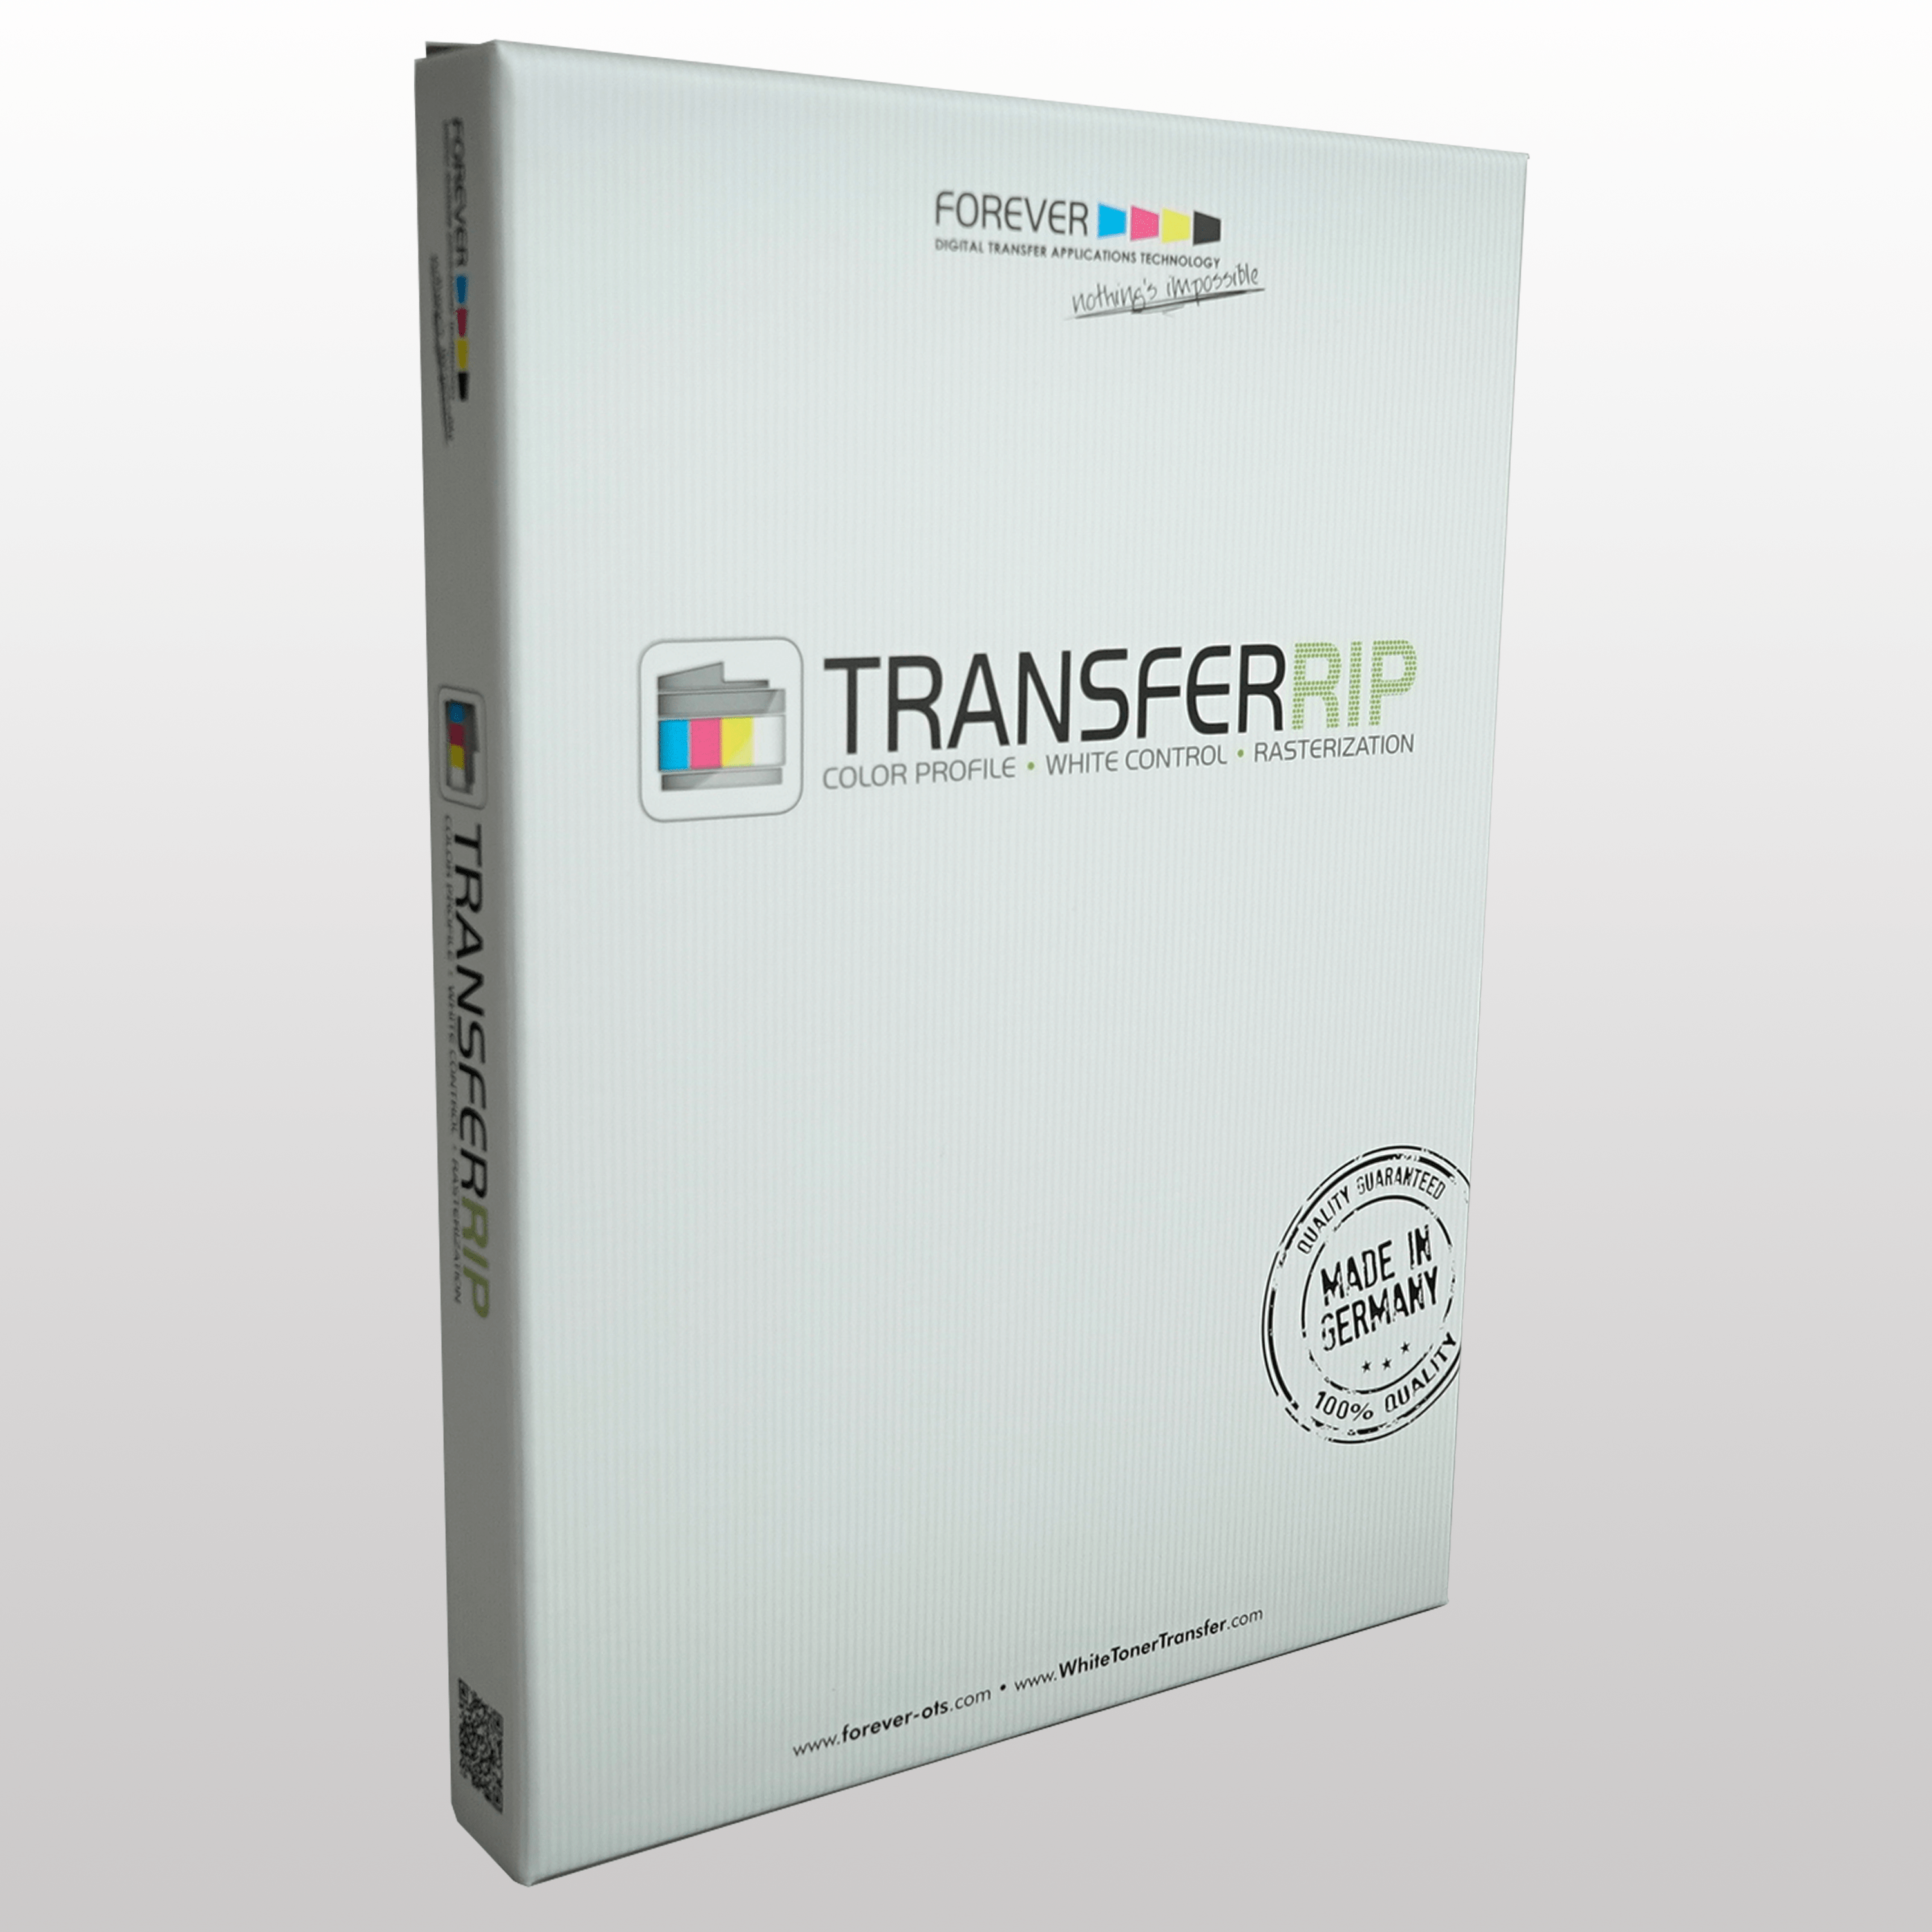 Transfer rip software for mac printing